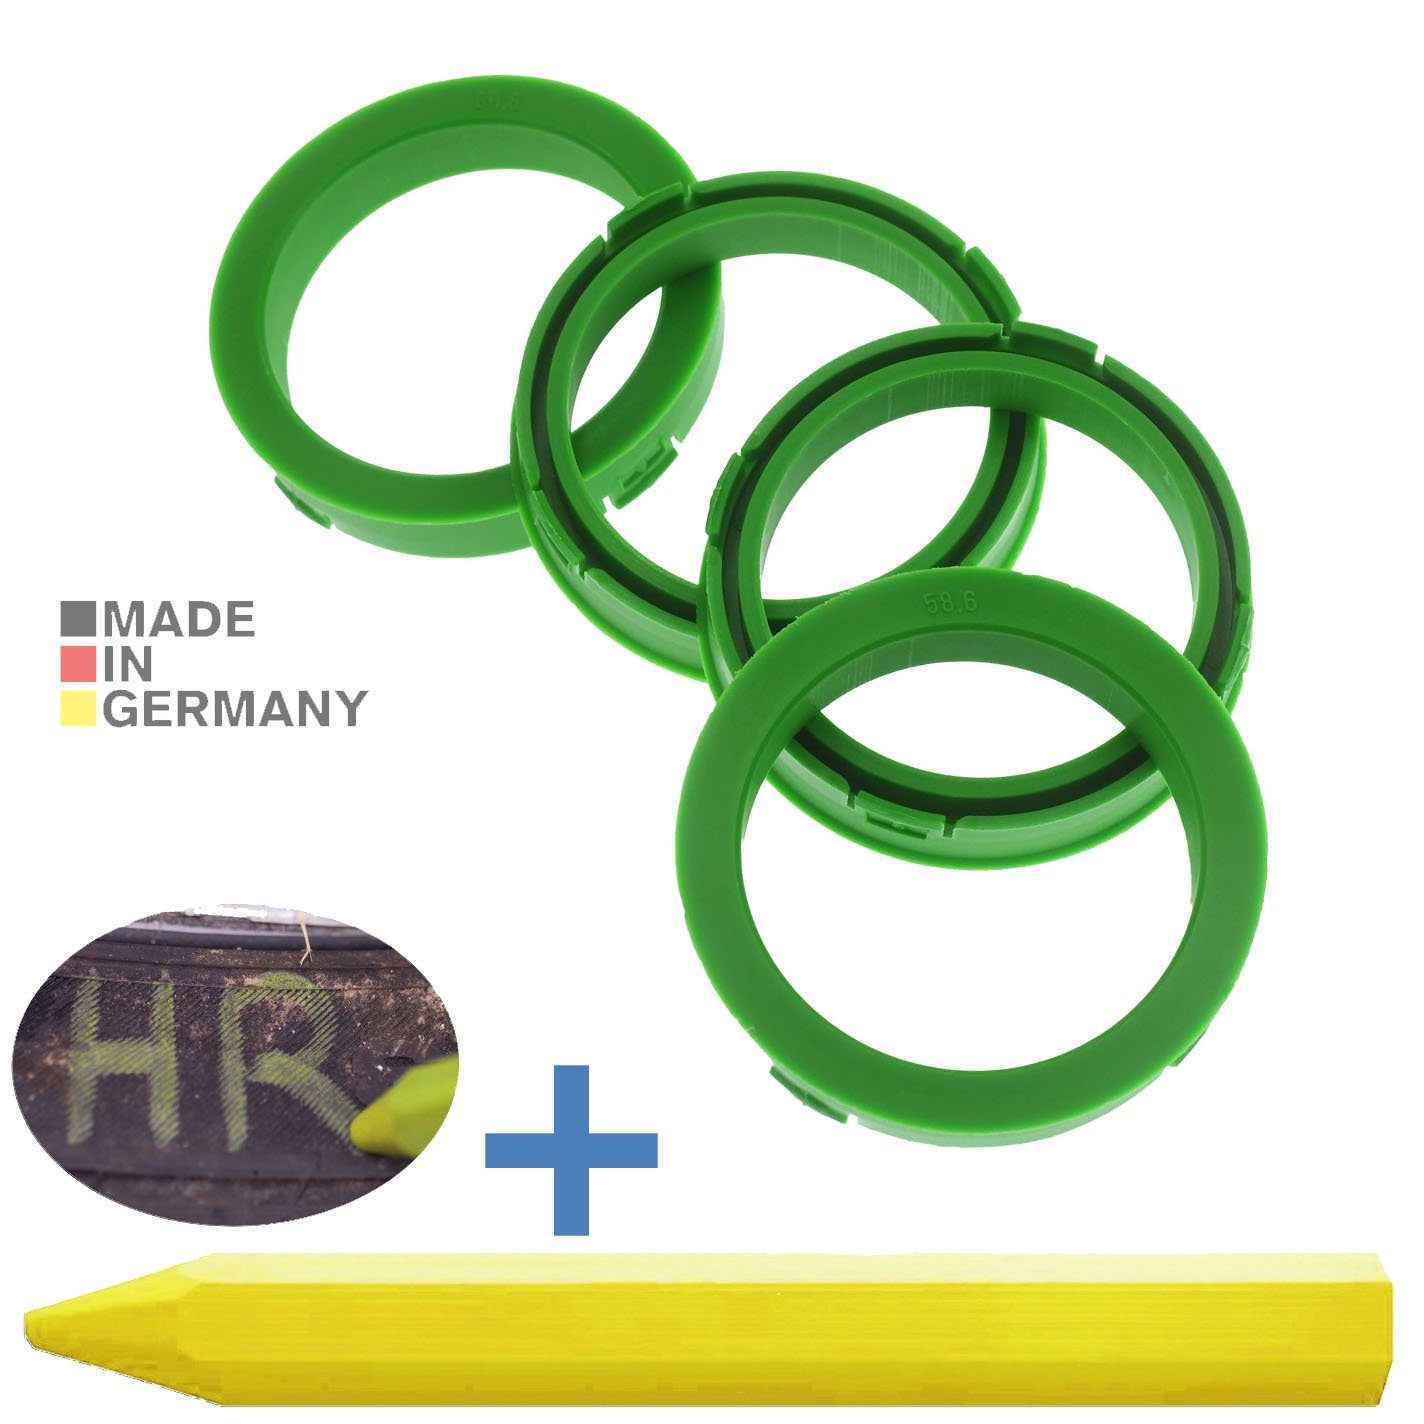 RKC Reifenstift 4X Zentrierringe Hellgrün Felgen Ringe + 1x Reifen Kreide Fett Stift, Maße: 73,1 x 58,6 mm